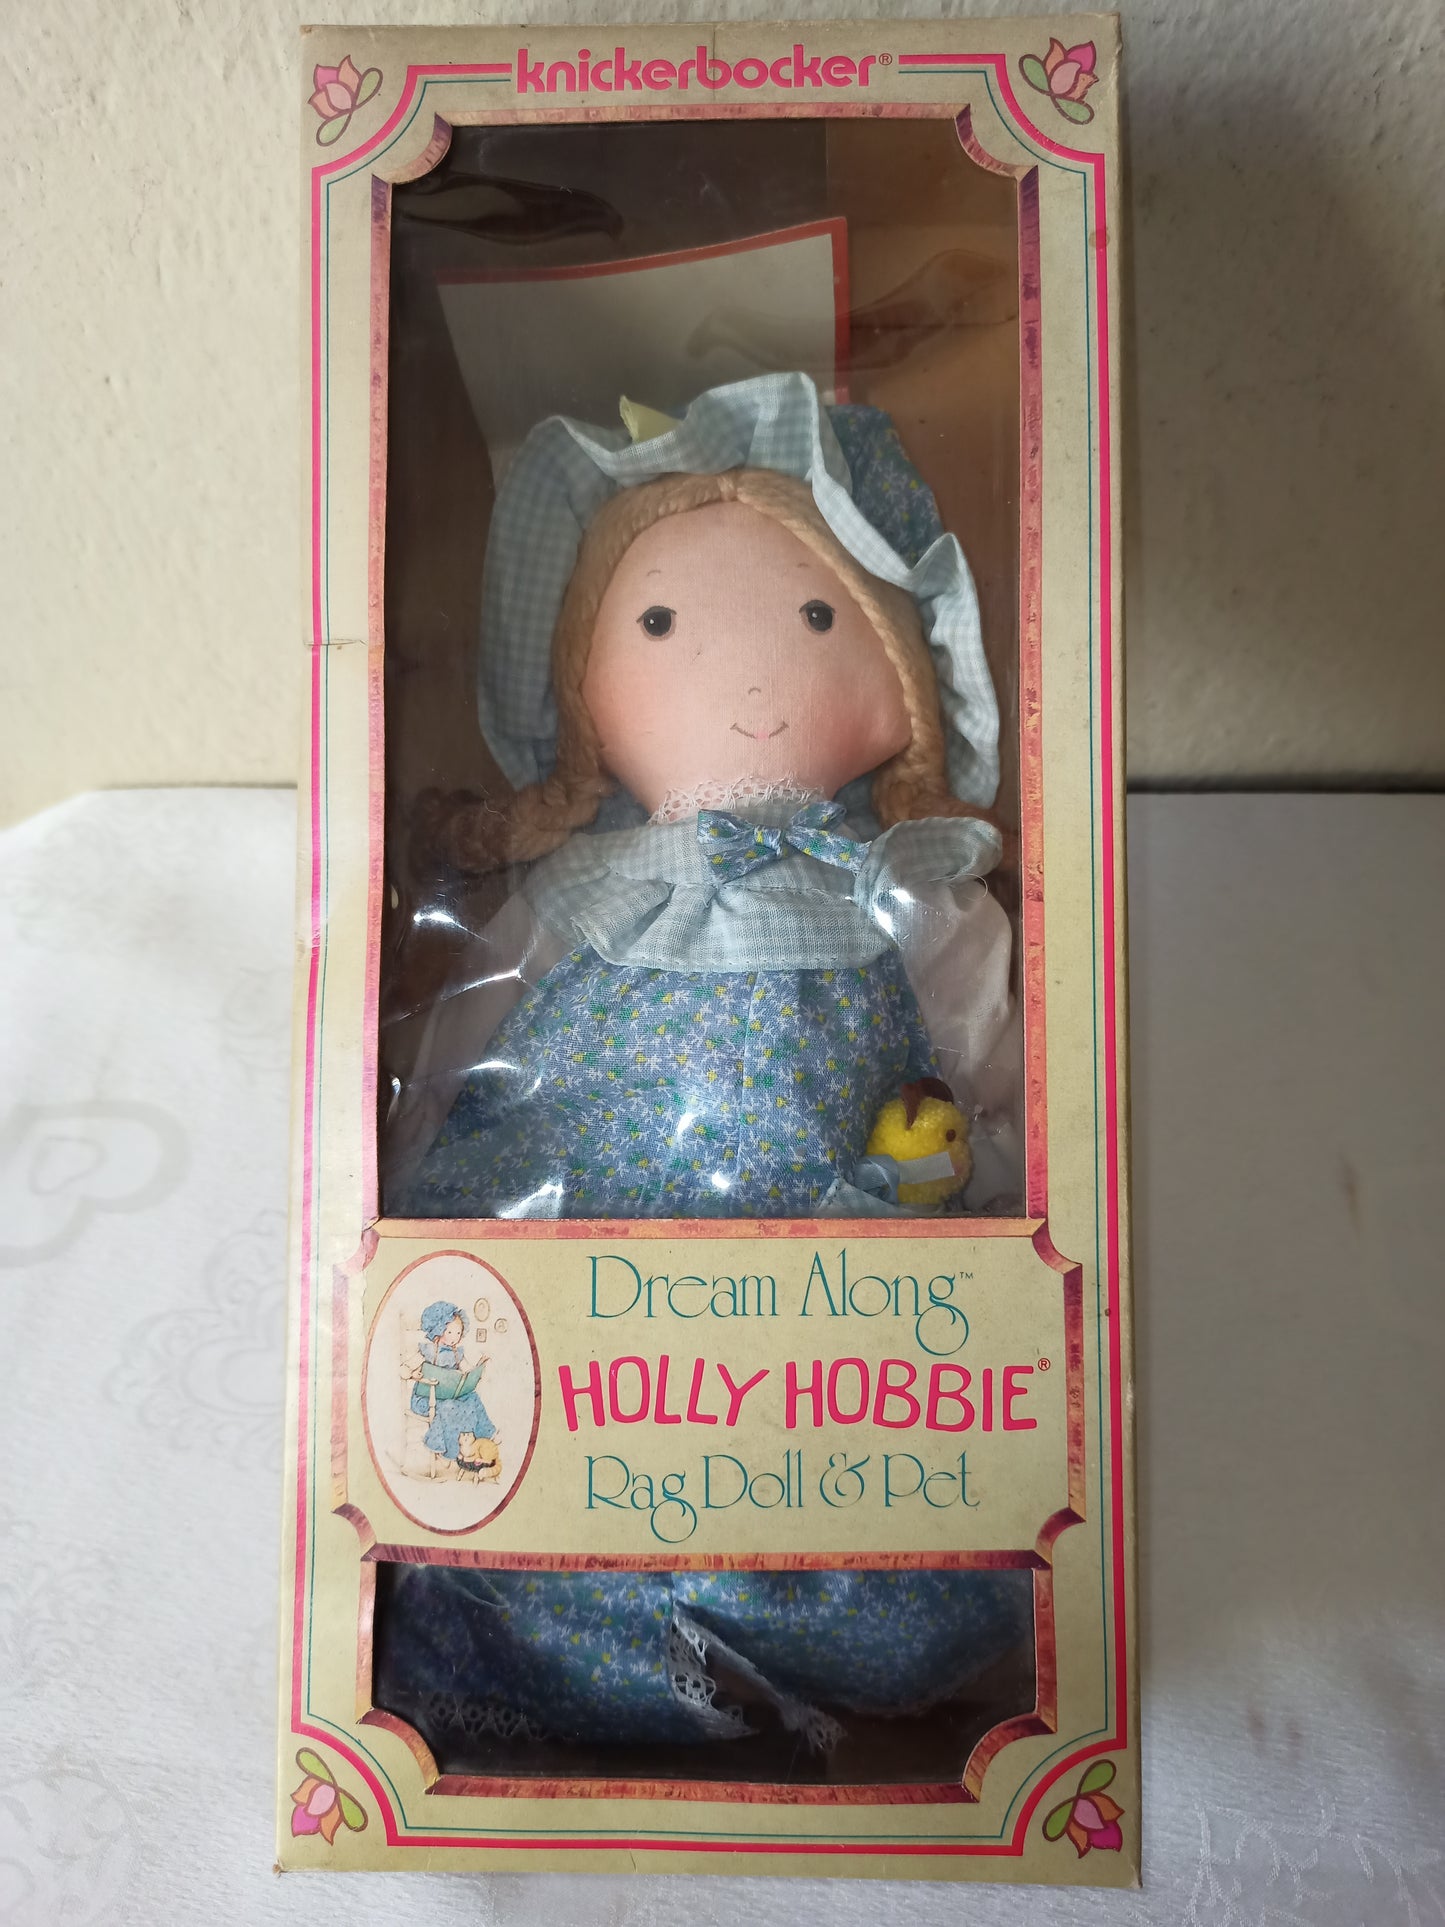 Holly Hobbie Dream a long doll, original Knickerbocker from the 70s